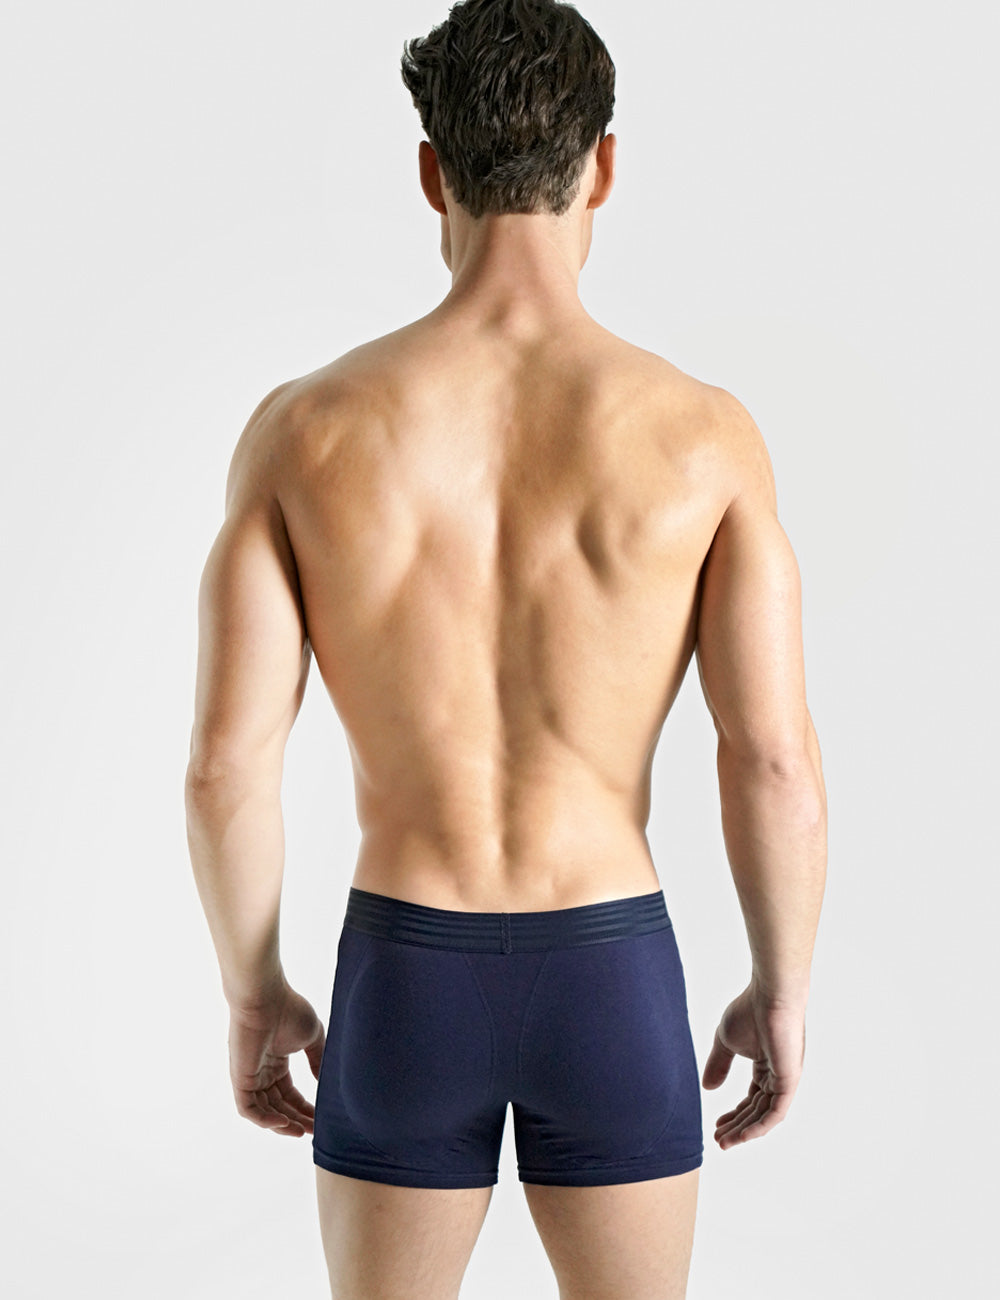 Men's Molded Padded Butt Booster Enhancer Boxer Brief Boyshort Underwear  8108